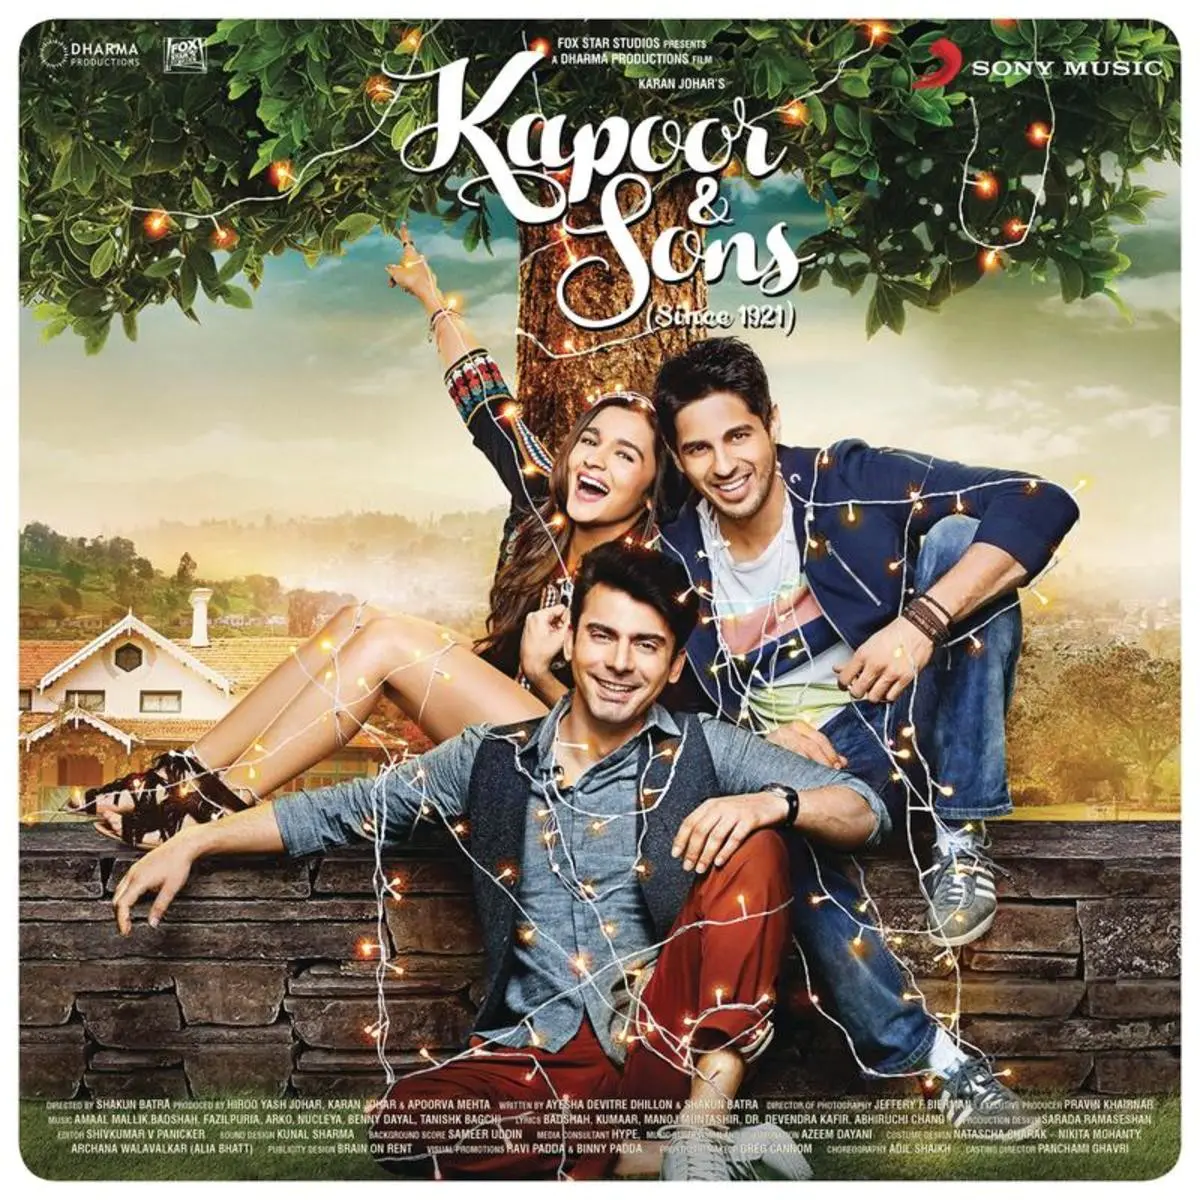 Kar Gayi Chull Lyrics In Hindi Kapoor Sons Since 1921 Original Motion Picture Soundtrack Kar Gayi Chull Song Lyrics In English Free Online On Gaana Com